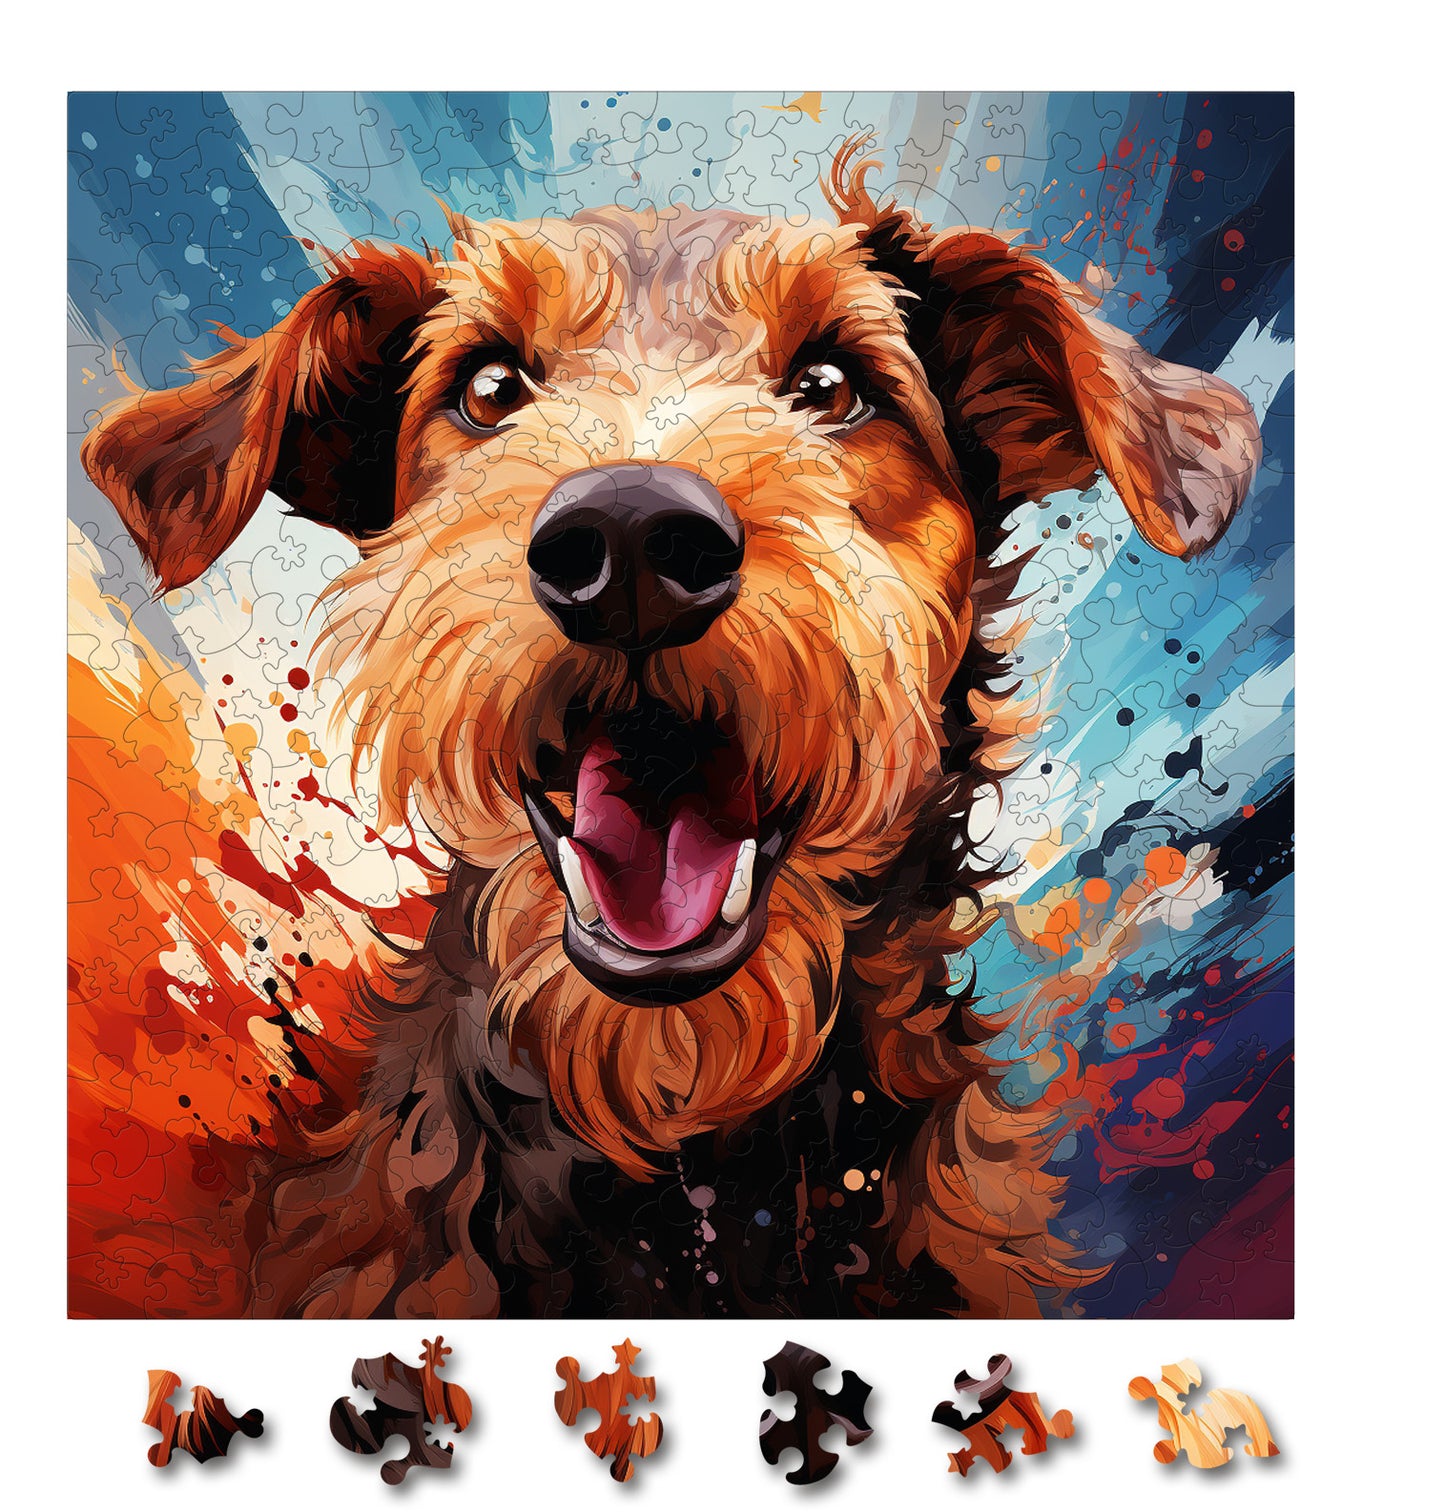 Puzzle cu Animale - Caini - Welsh Terrier 3 - 200 piese - 30 x 30 cm